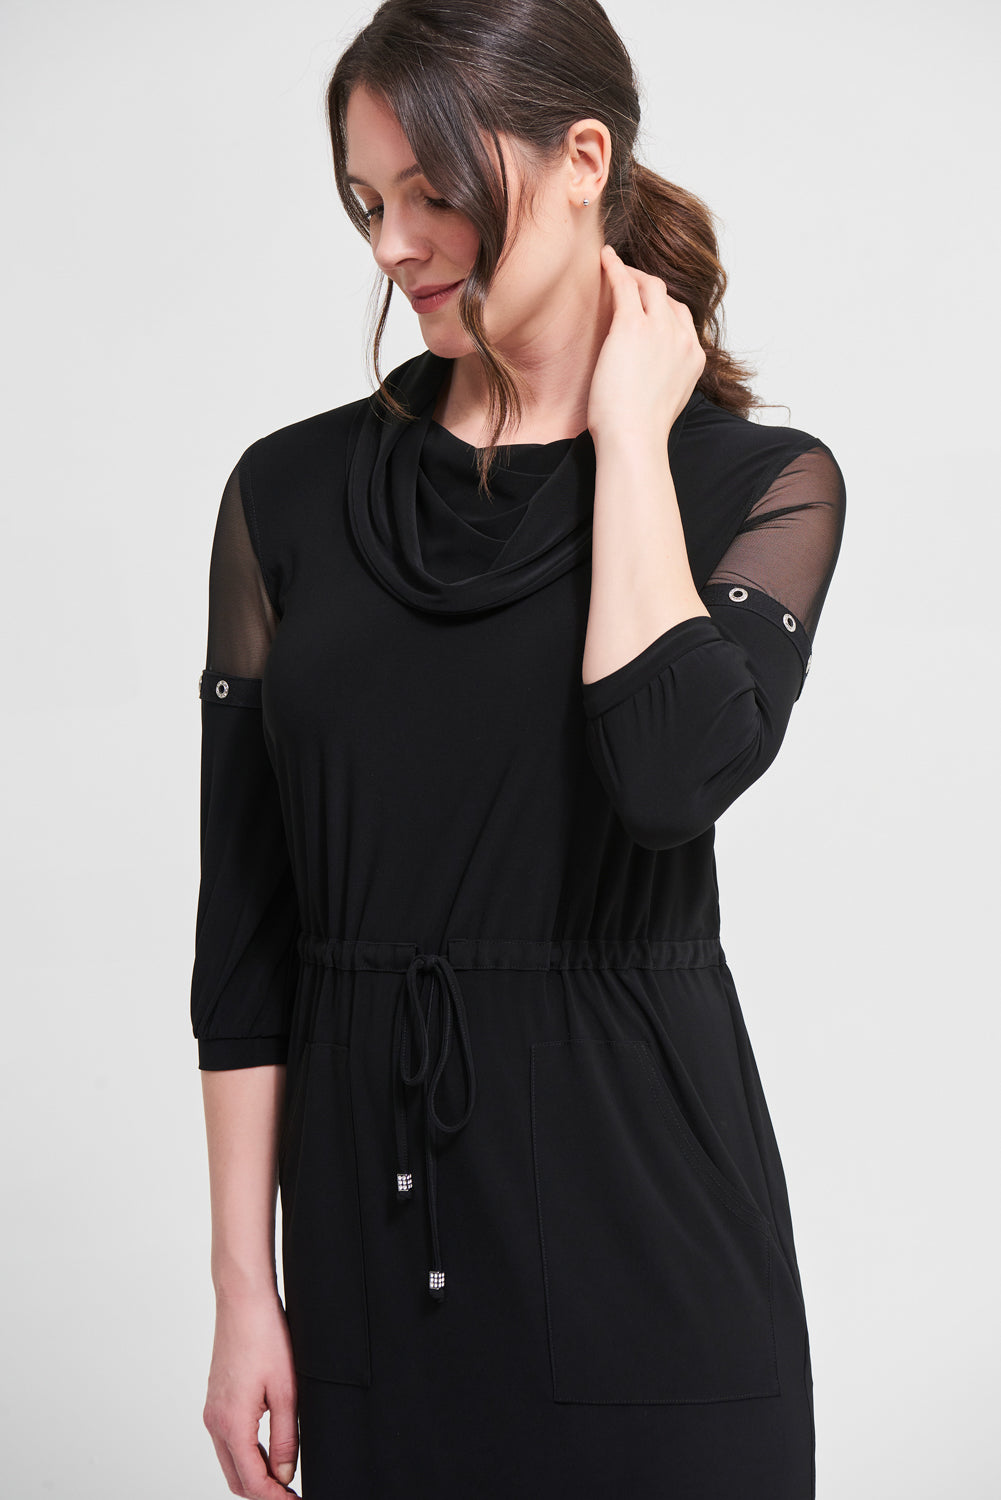 Joseph Ribkoff Black Mesh Detail Dress Style 213458